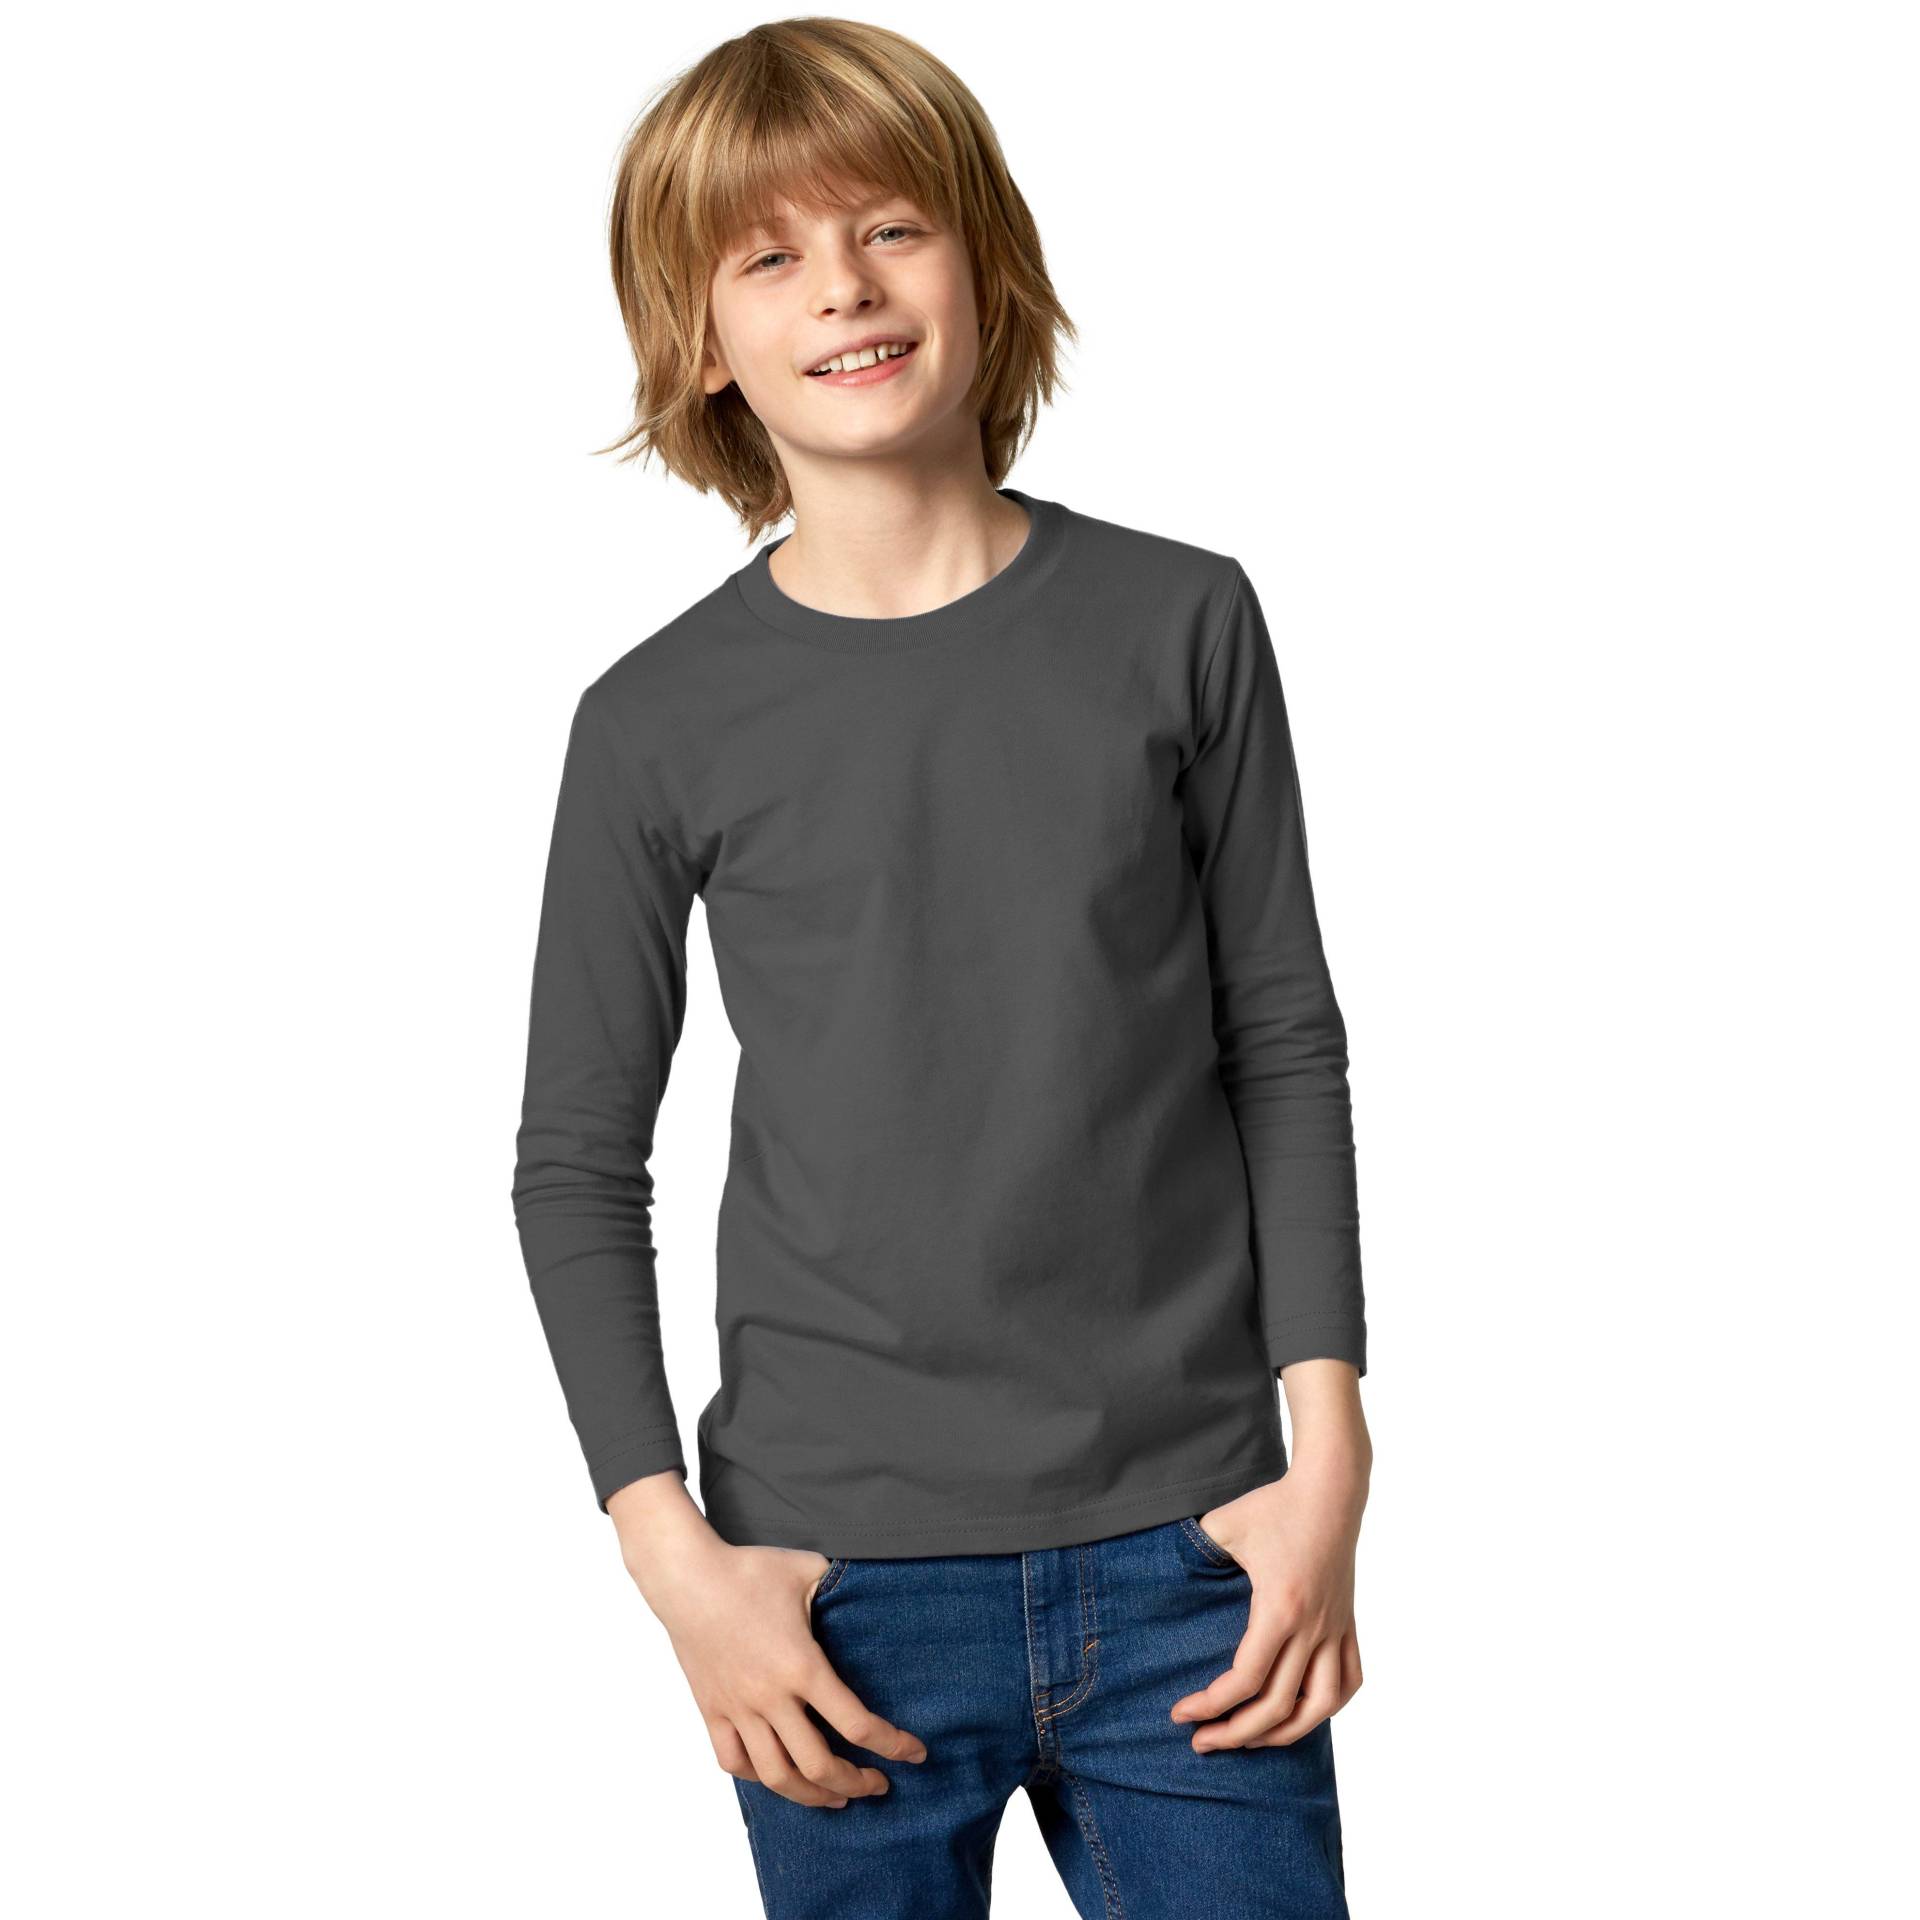 Langarm-shirt Kinder Jungen Grau 140 von Tectake